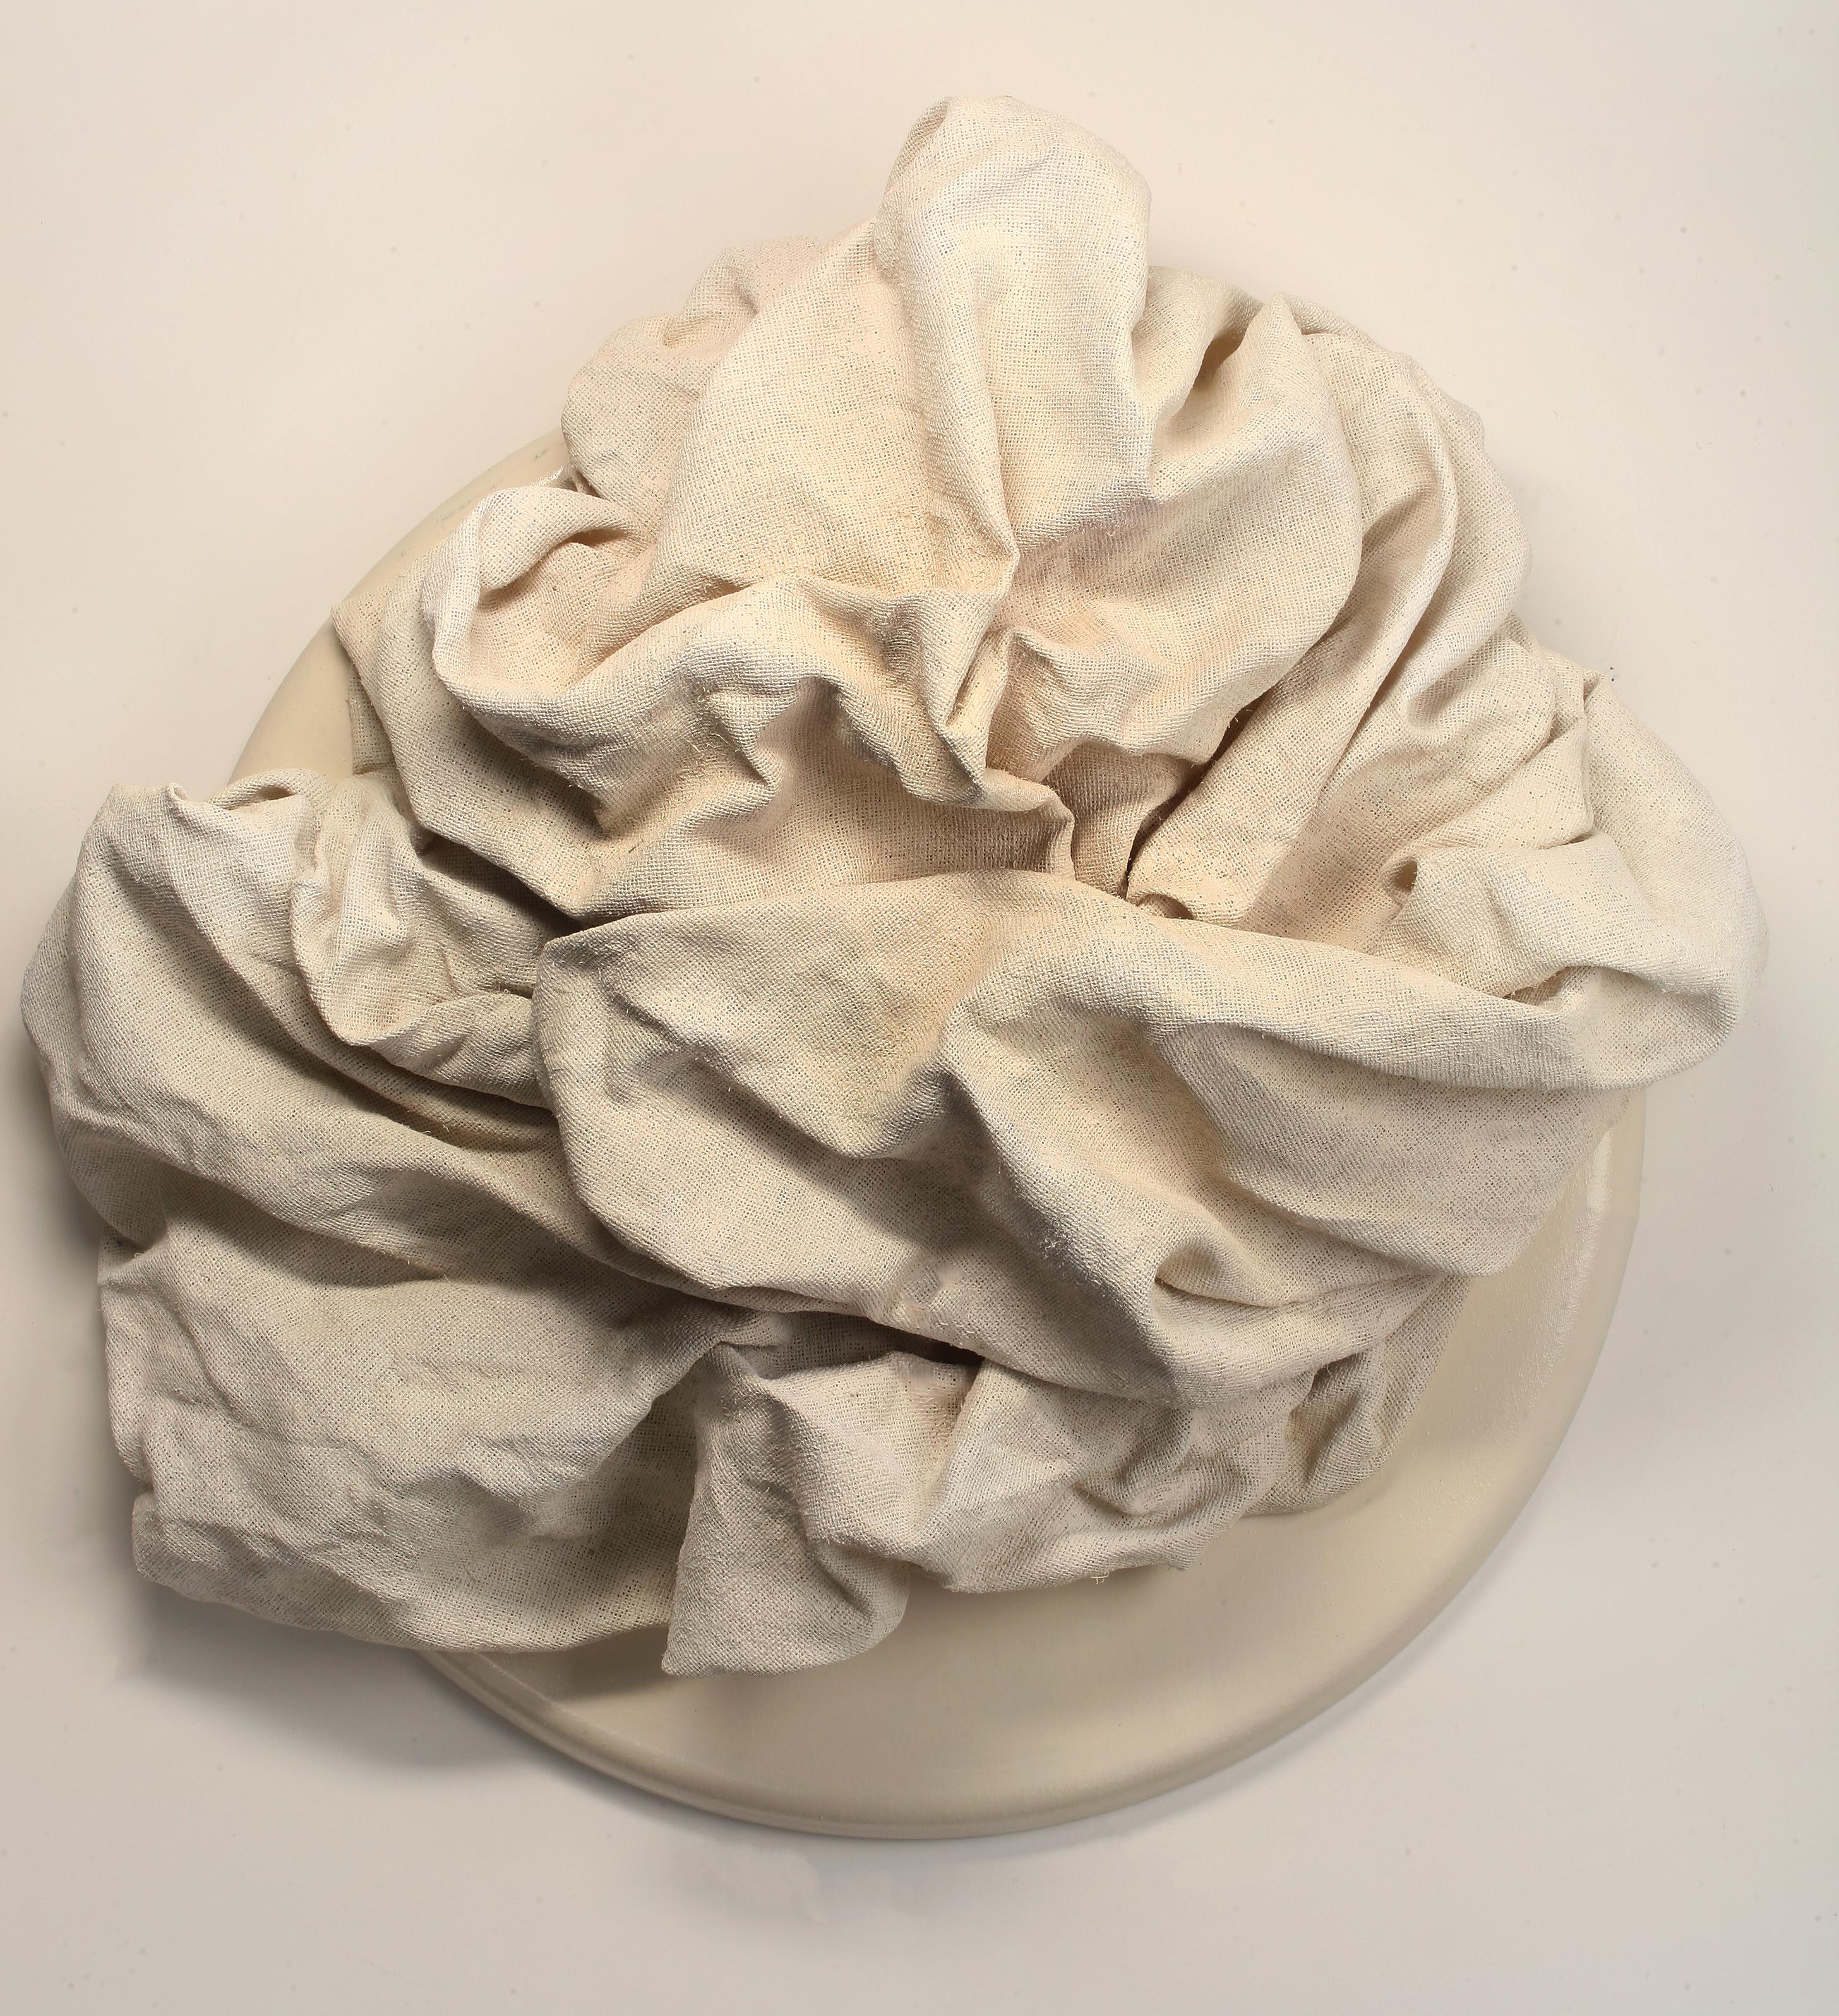 Chloe Hedden Abstract Sculpture - "Creme Folds" Wall sculpture- fabric, monochrome, monochromatic, elegant, bold